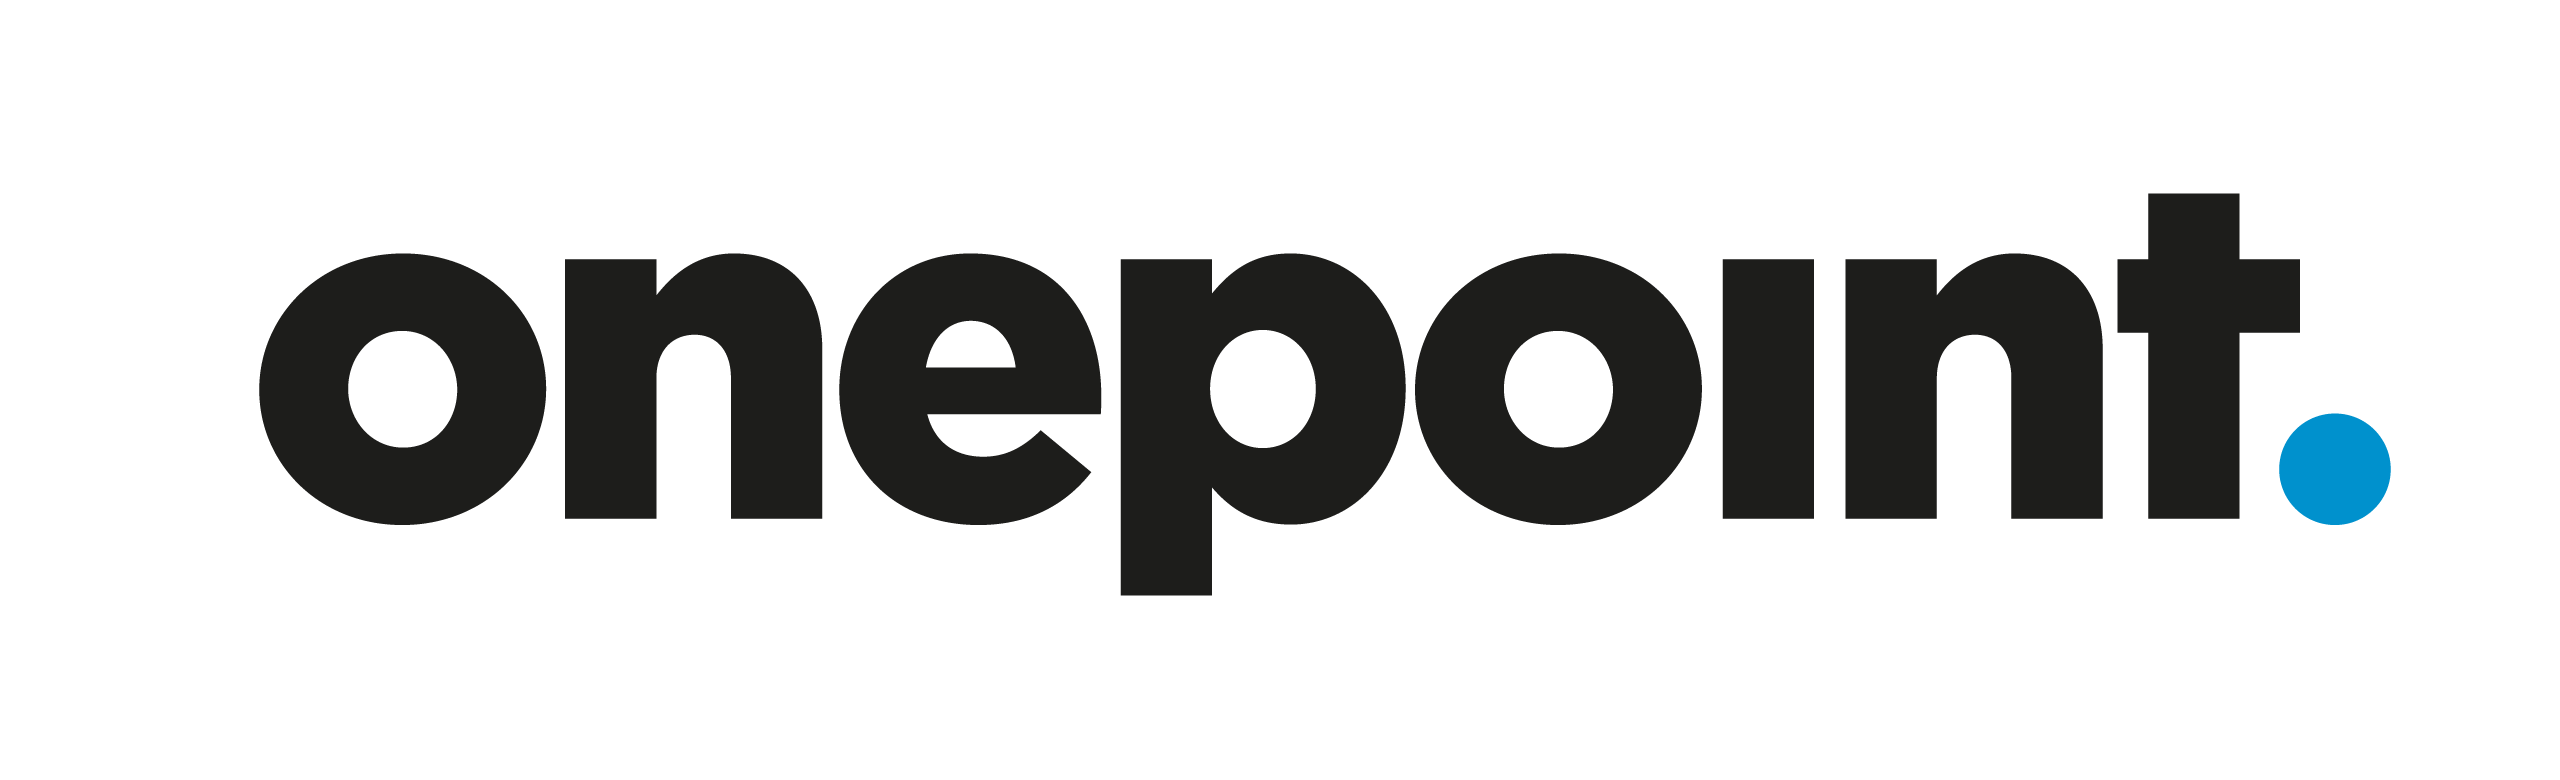 onepoint logo black